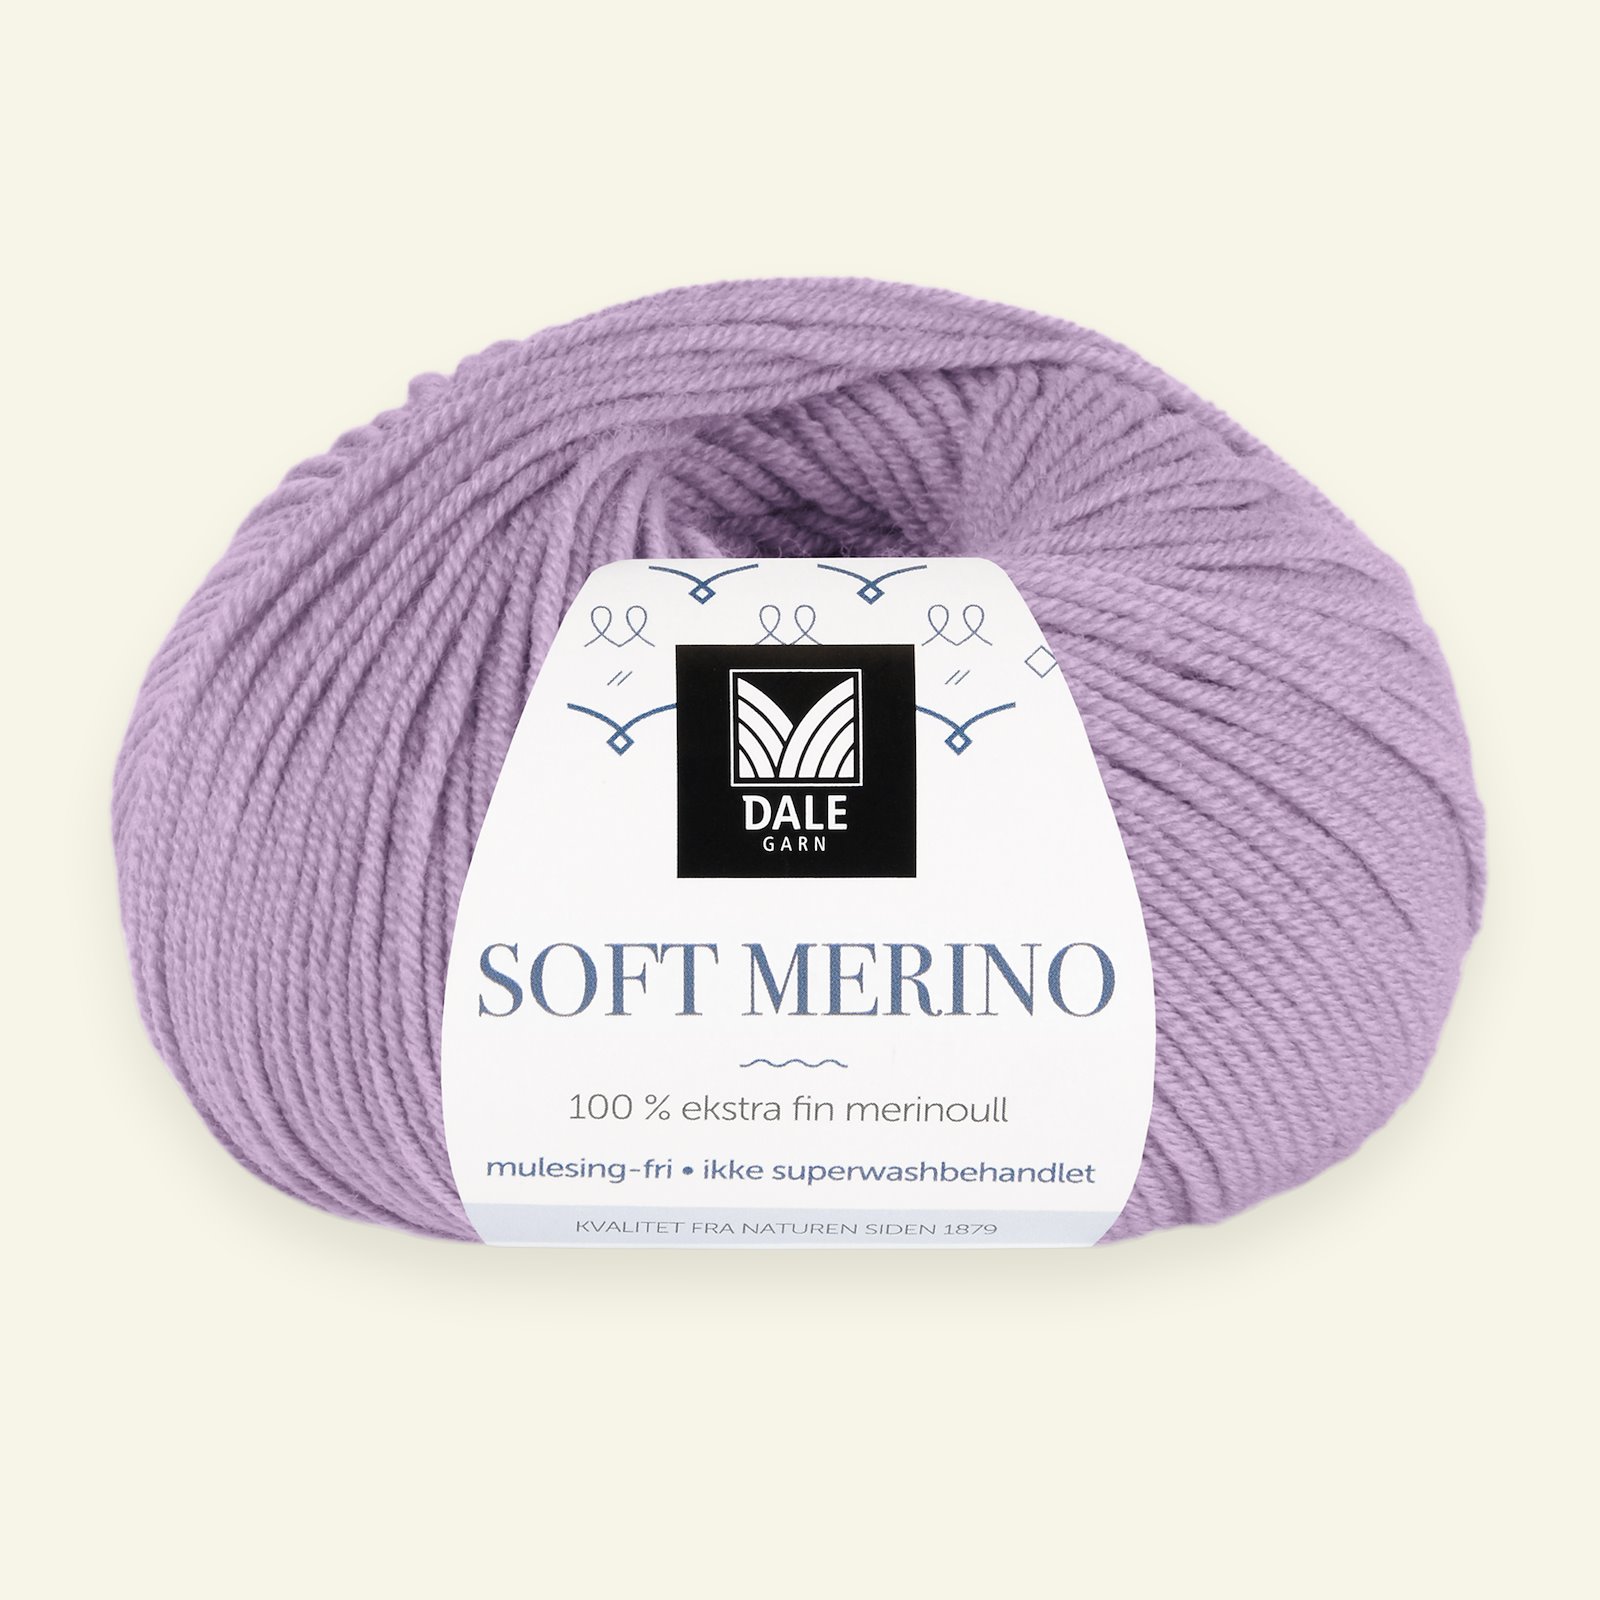 Dale Garn, 100% ekstra fint merinogarn "Soft Merino", Lys lavendel (3026) 90000347_pack